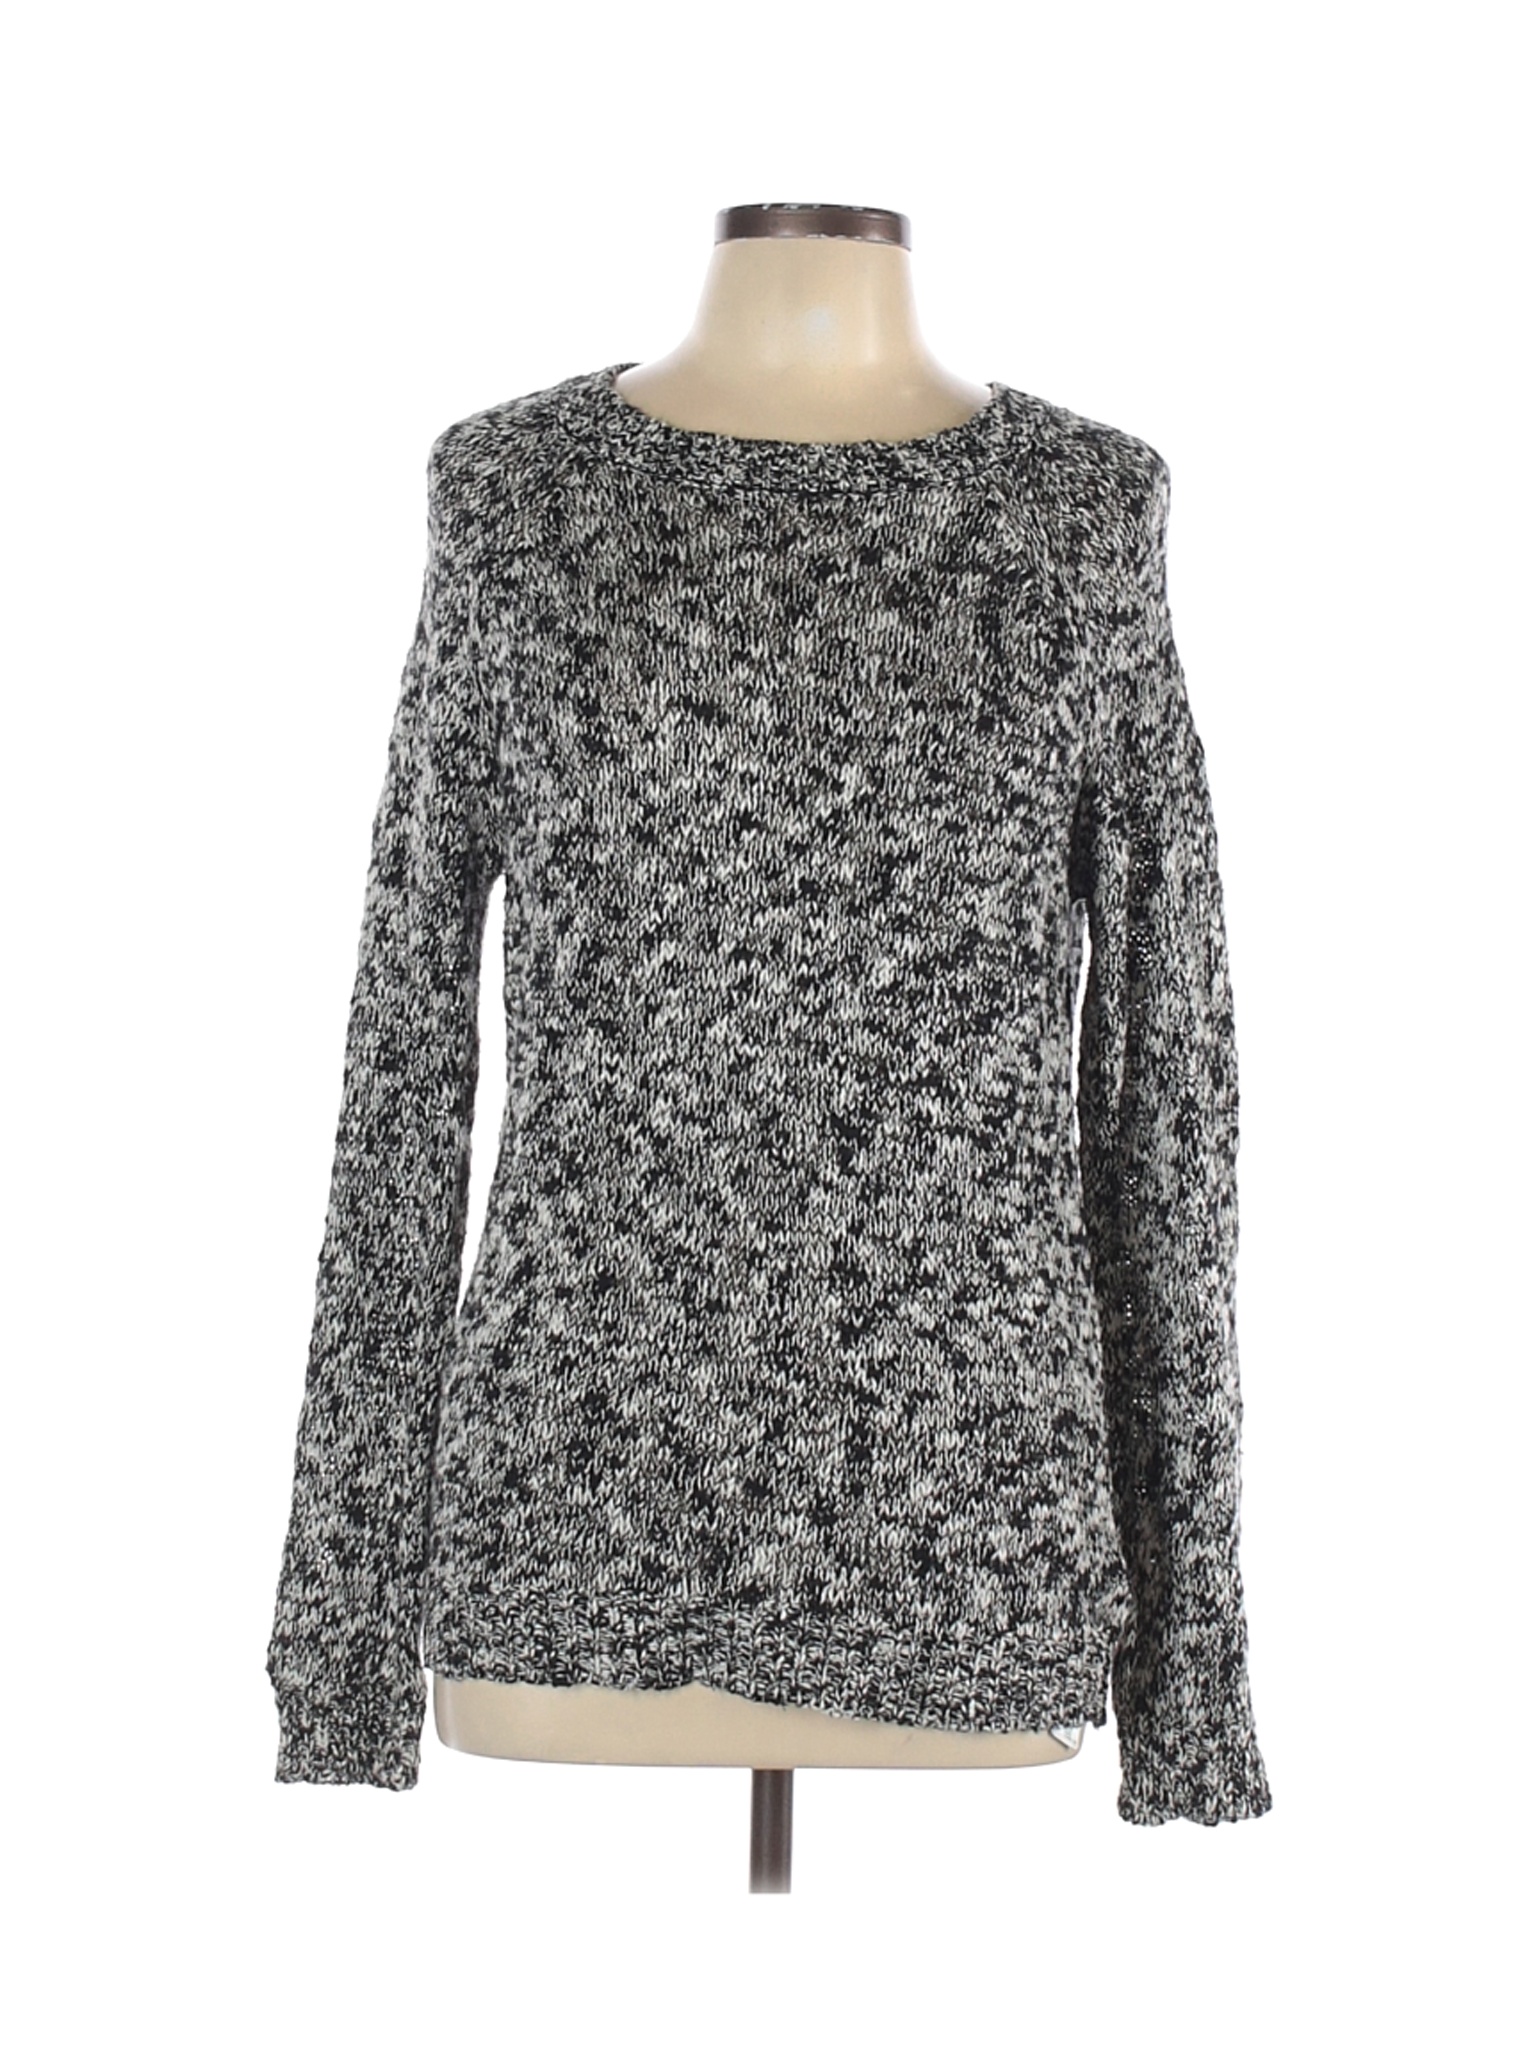 Joe Fresh Women Black Pullover Sweater L | eBay